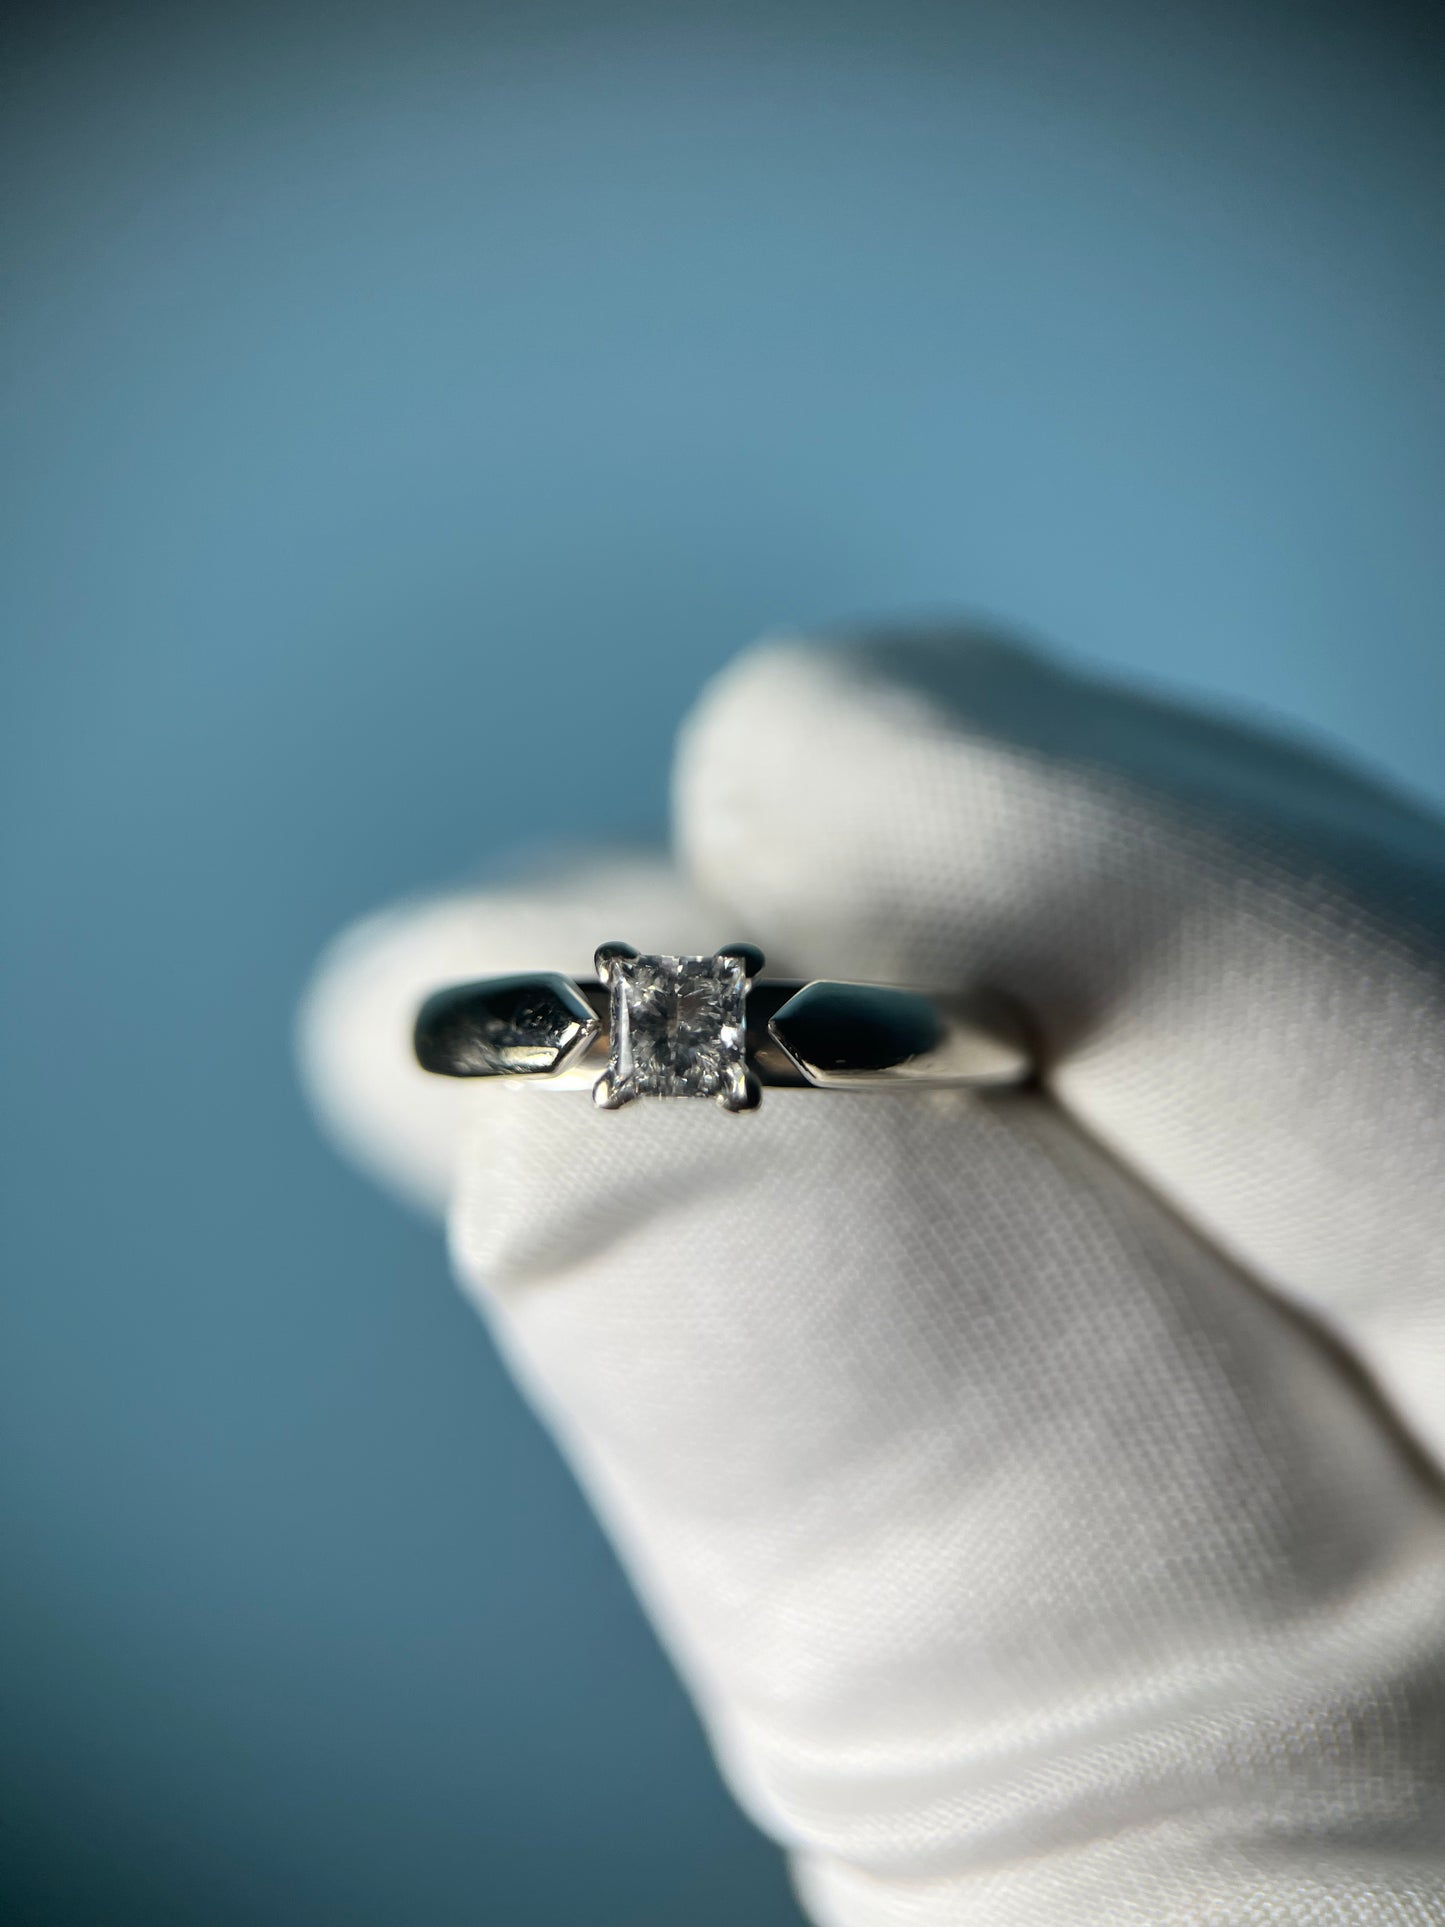 Solitary Princess Cut Diamond Ring in 14k White Gold